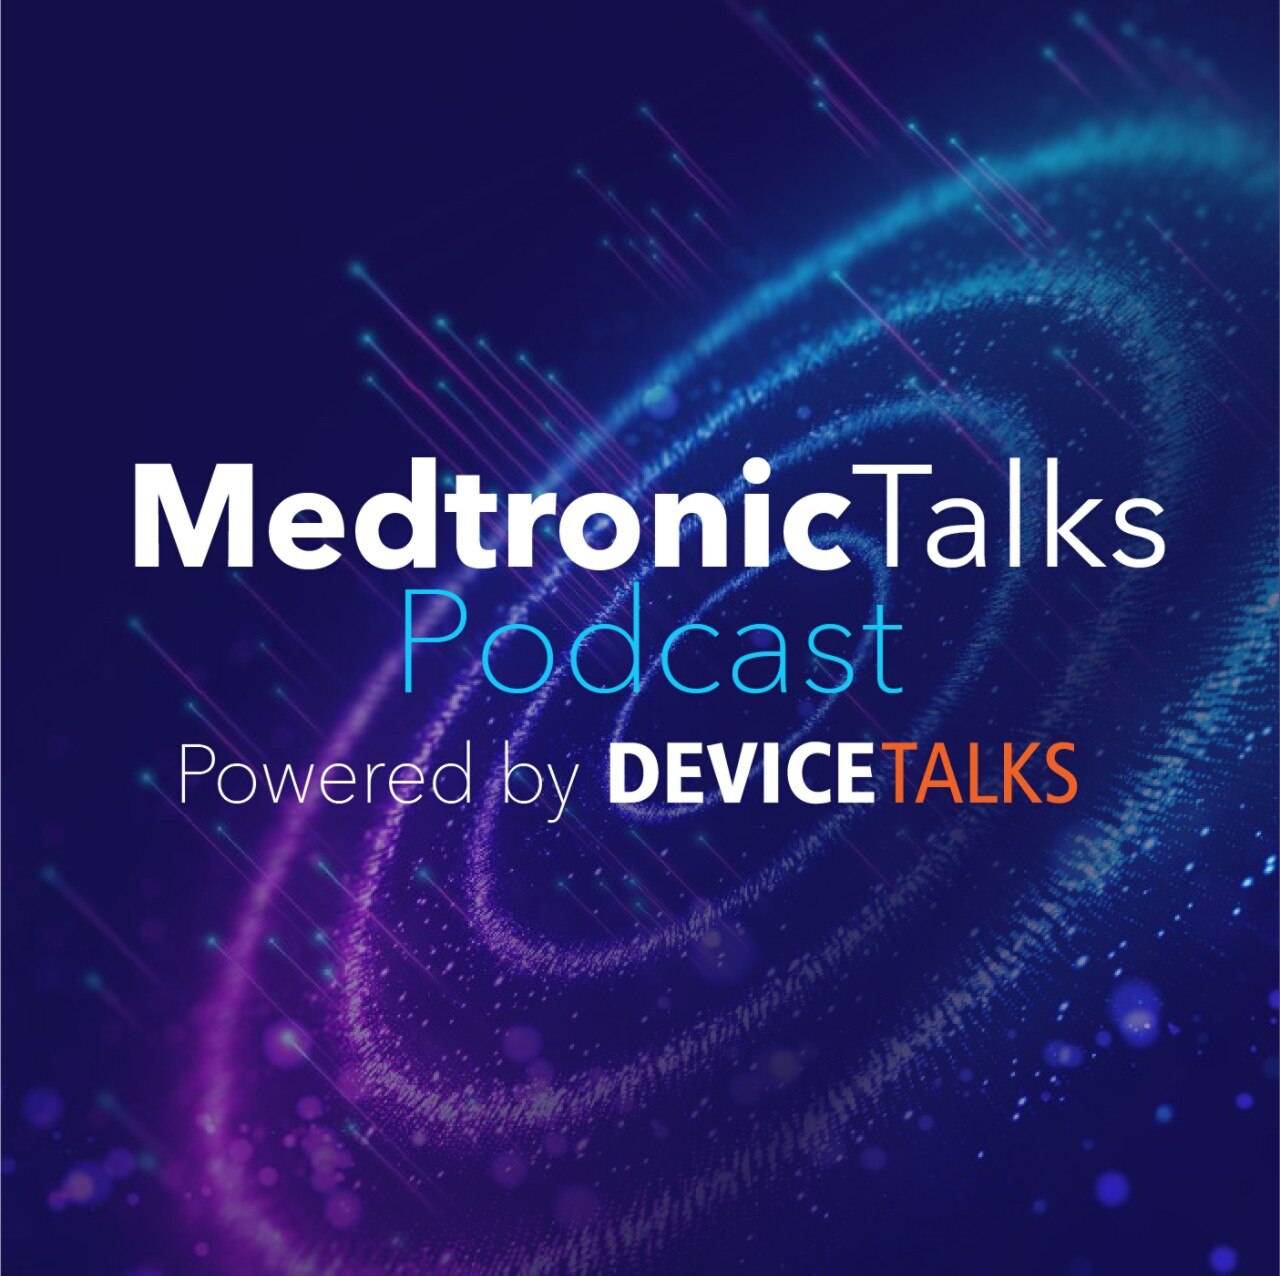 MedtornicTalks Podcast - powered by DeviceTalks